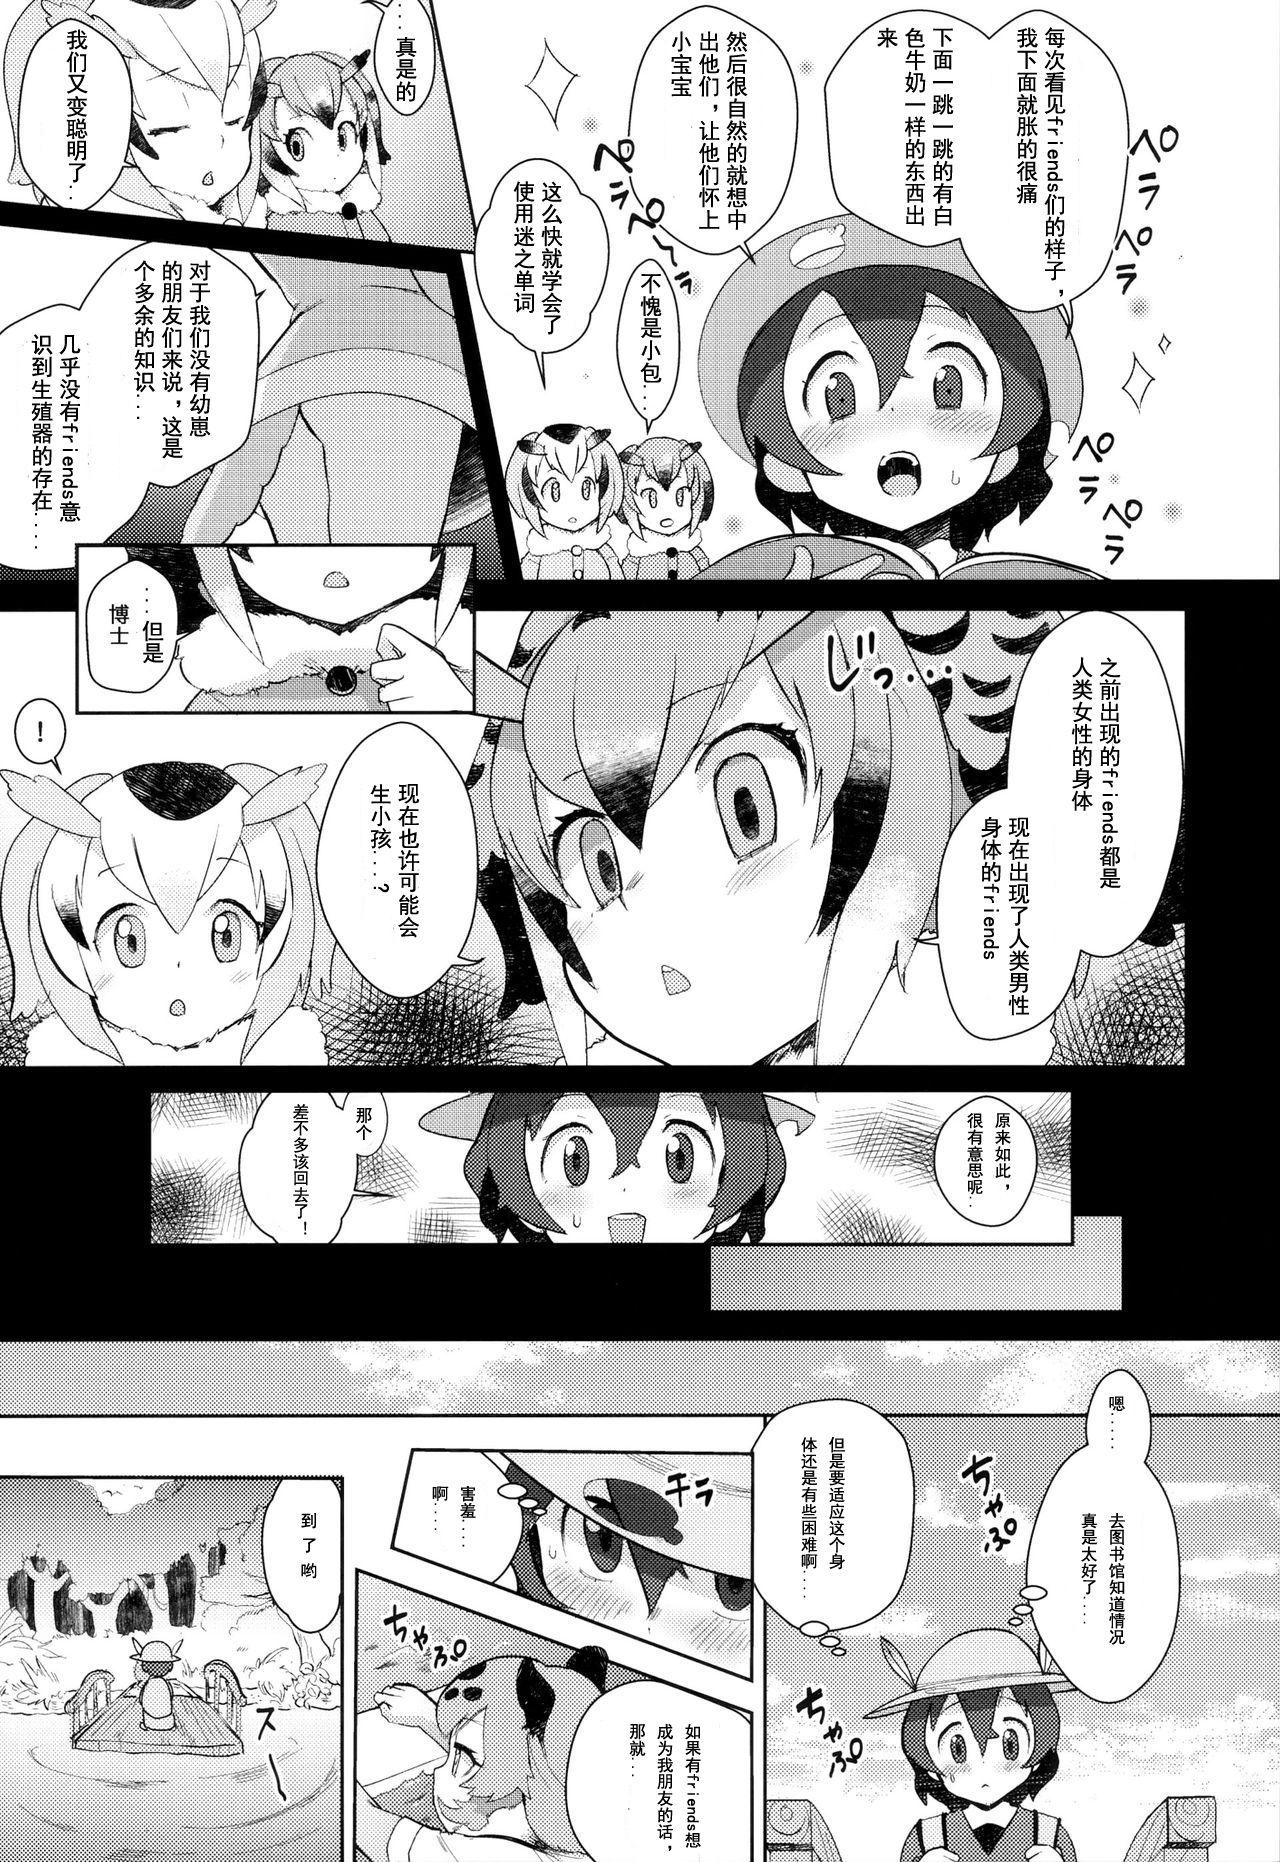  Tsugai no Friends - Kemono friends Pack - Page 6